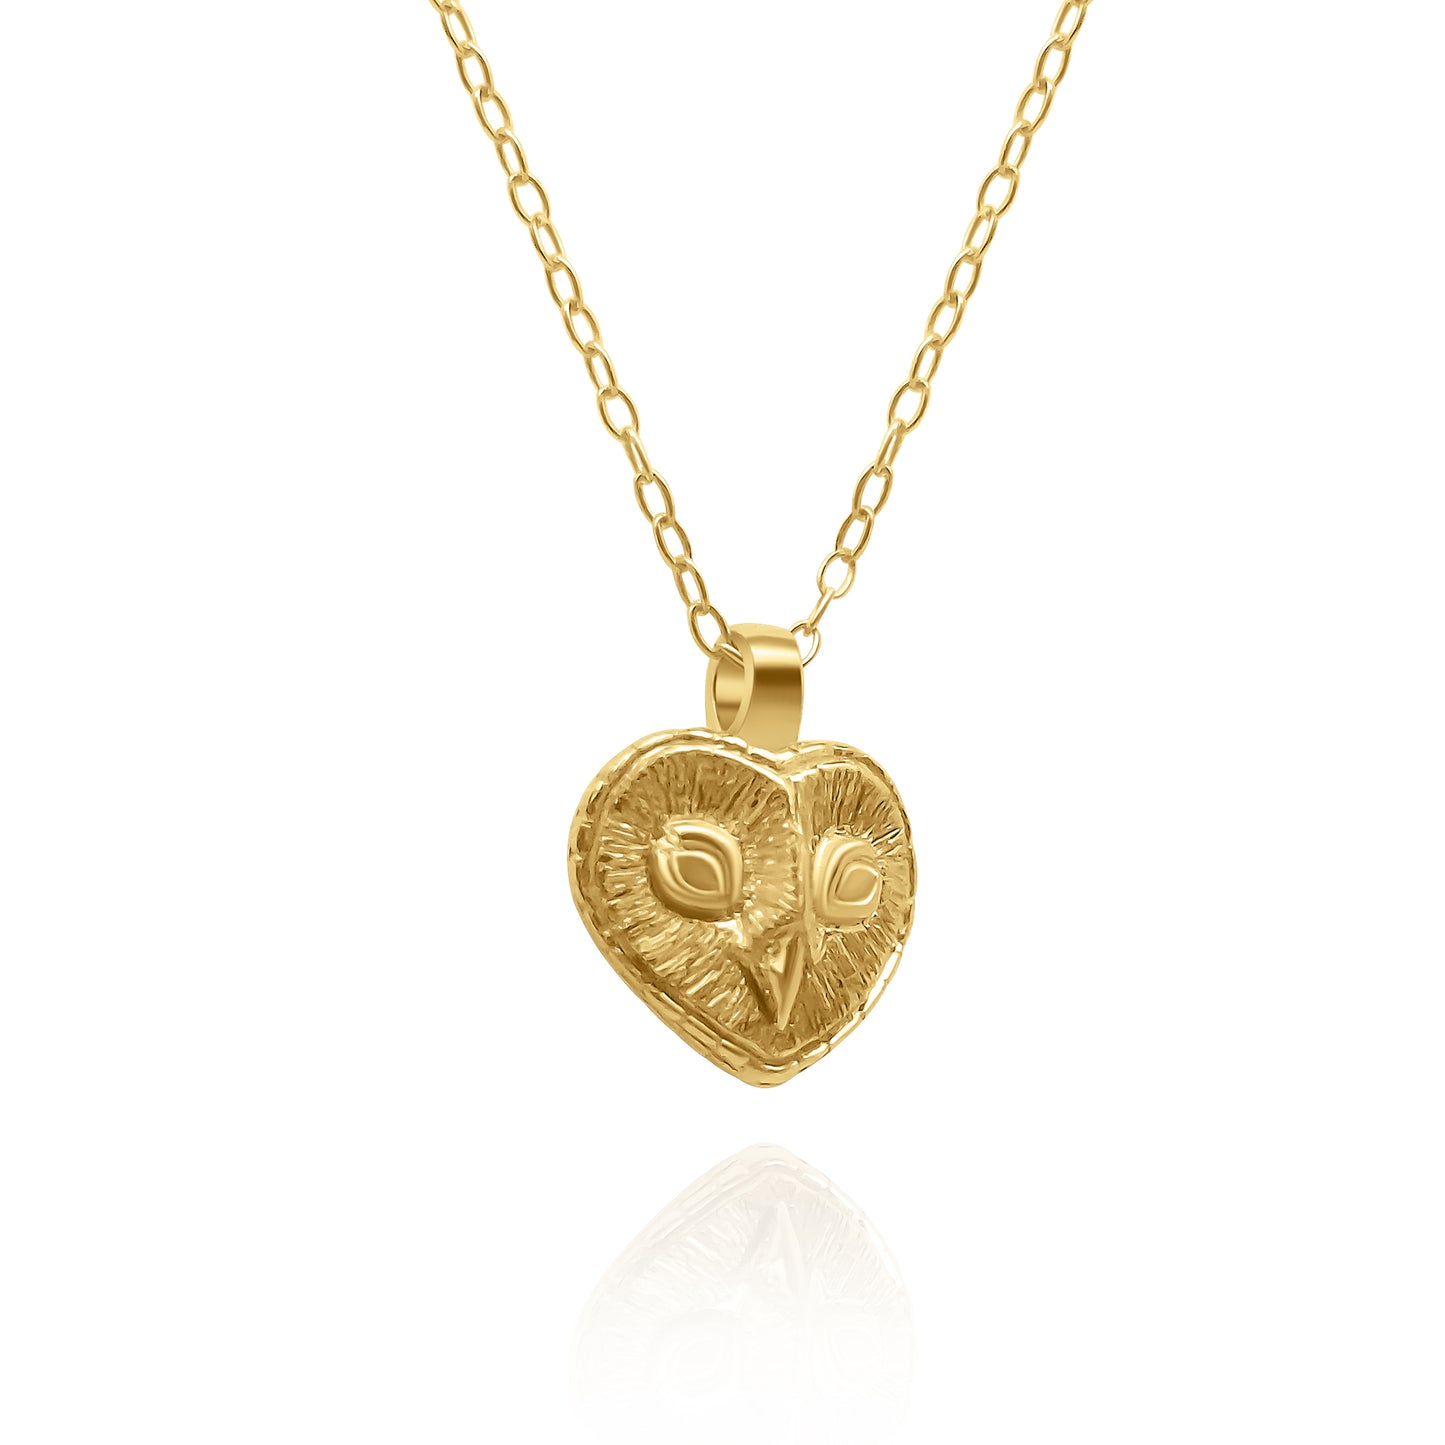 Gold vermeil Owl charm pendant and chain. © Adrian Ashley